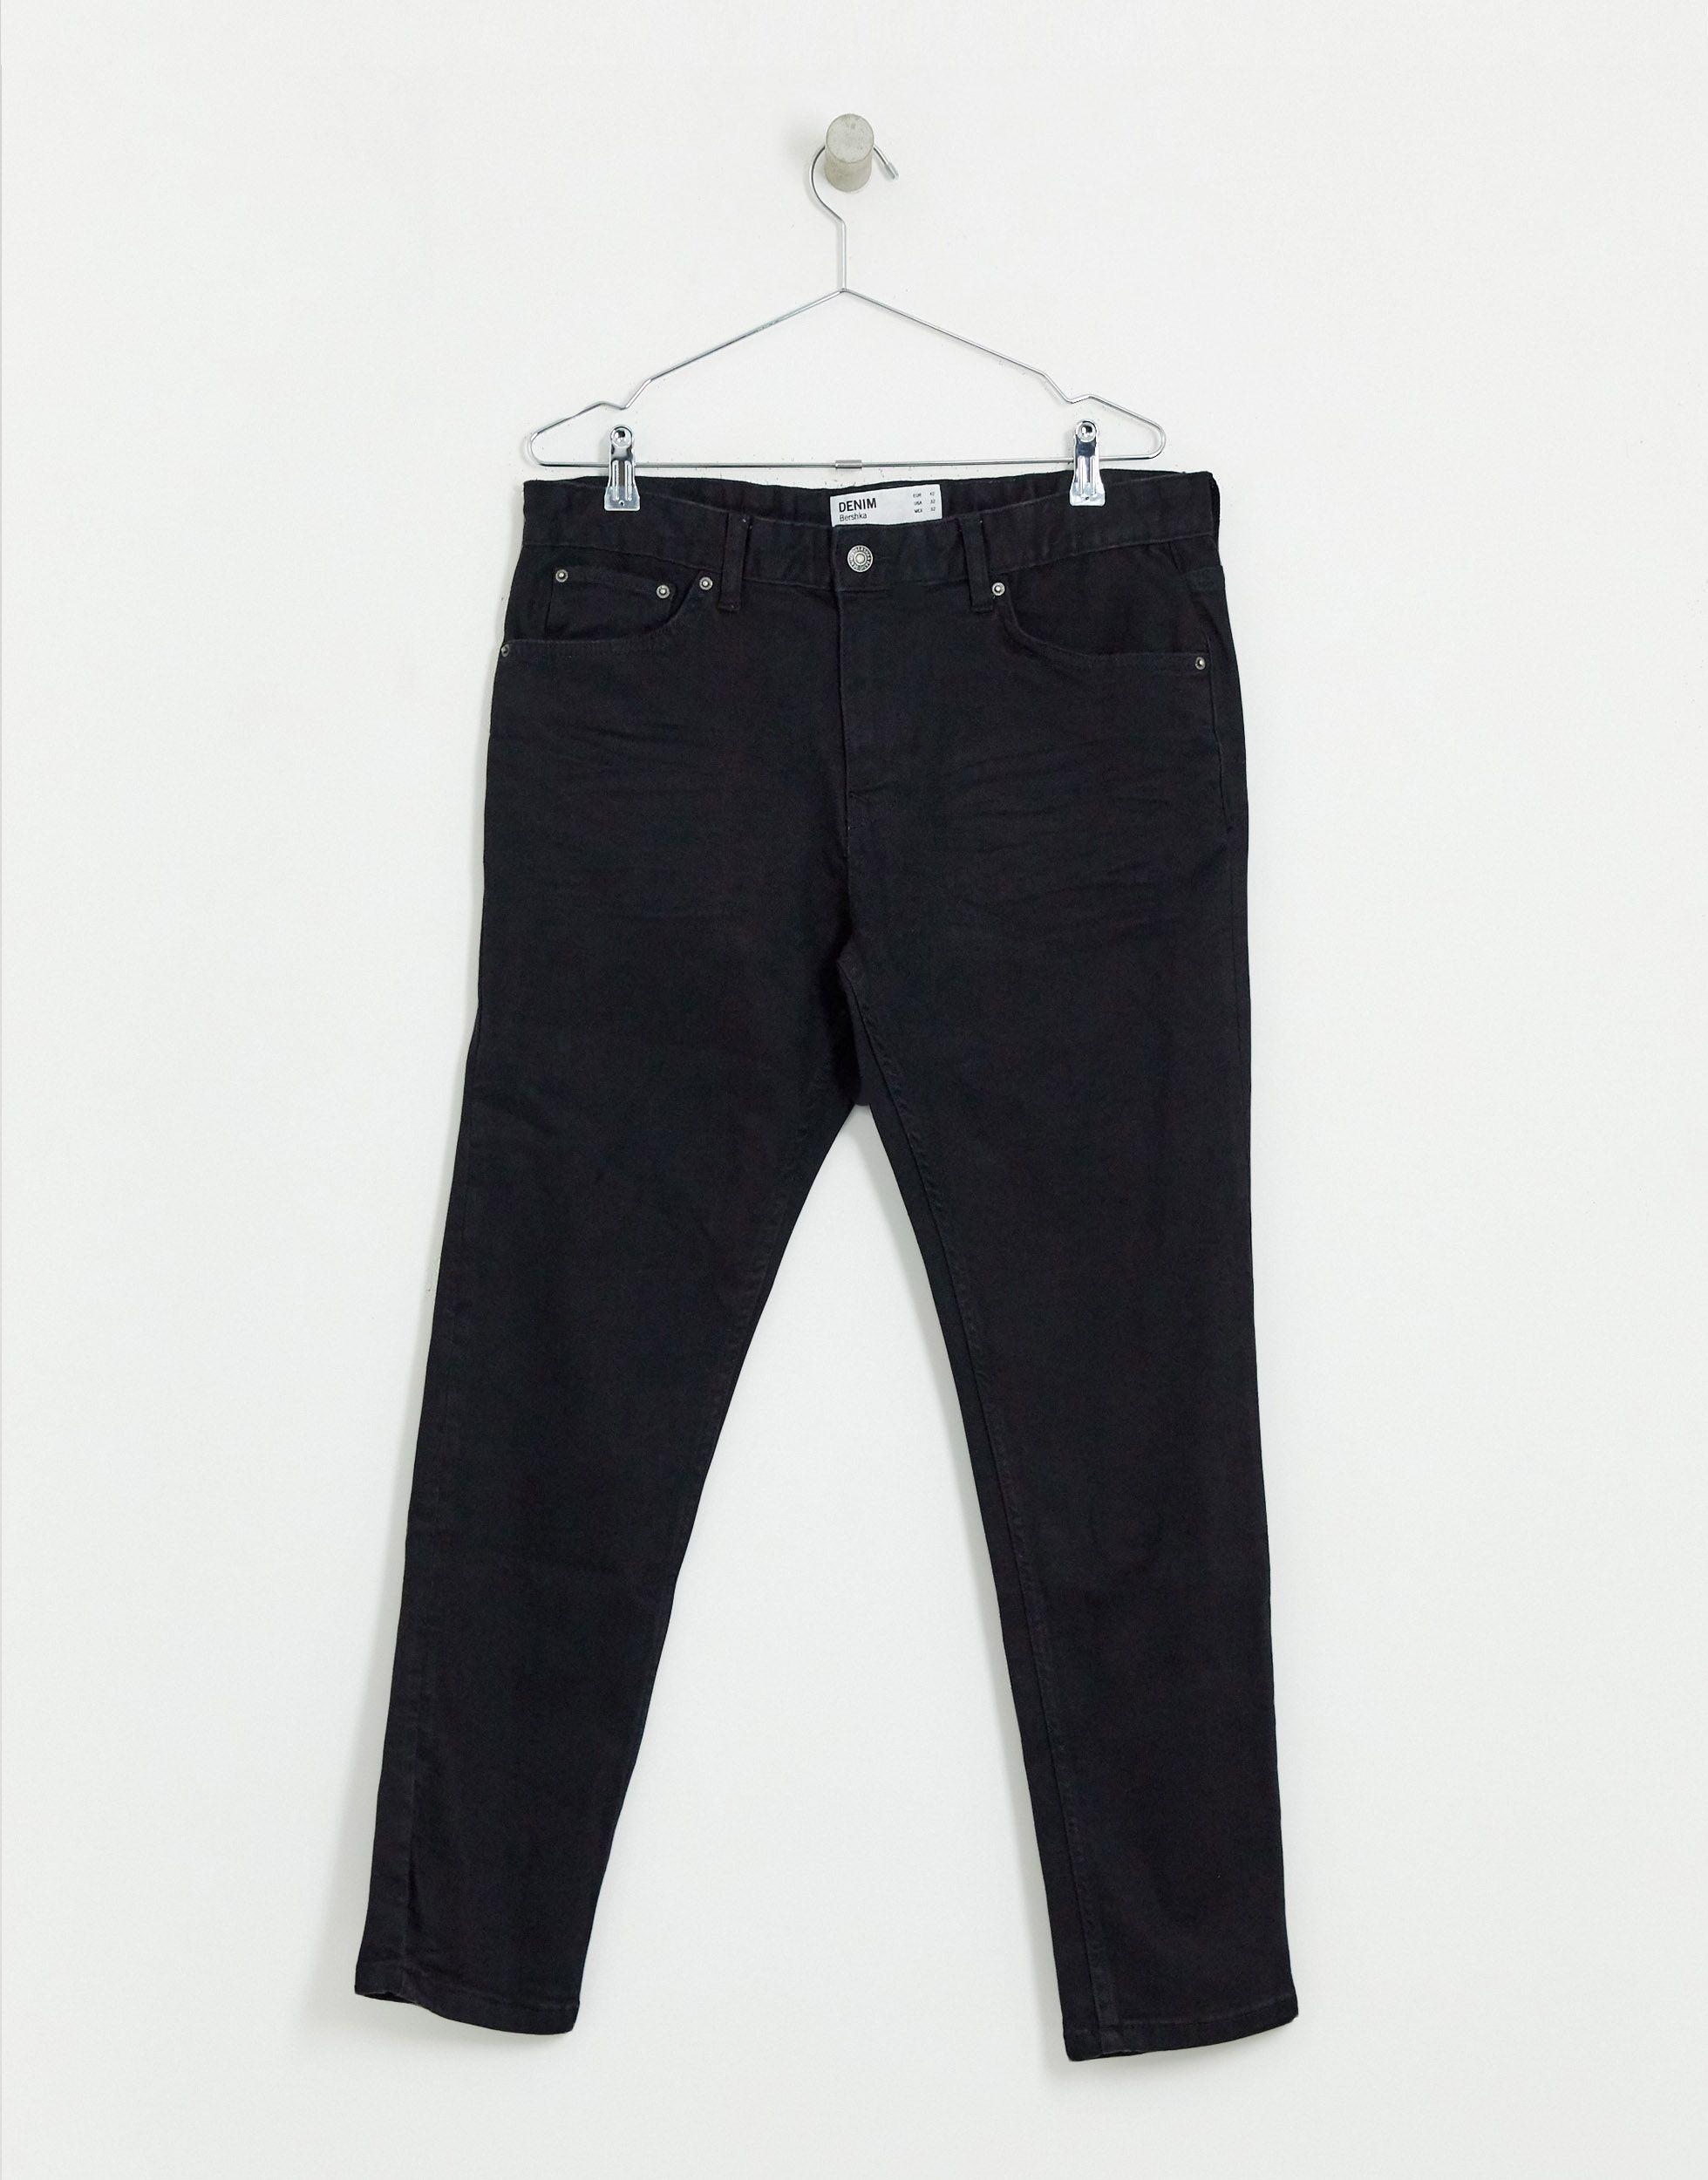 Bershka Denim Slim Fit Jeans in Black for Men - Save 6% - Lyst